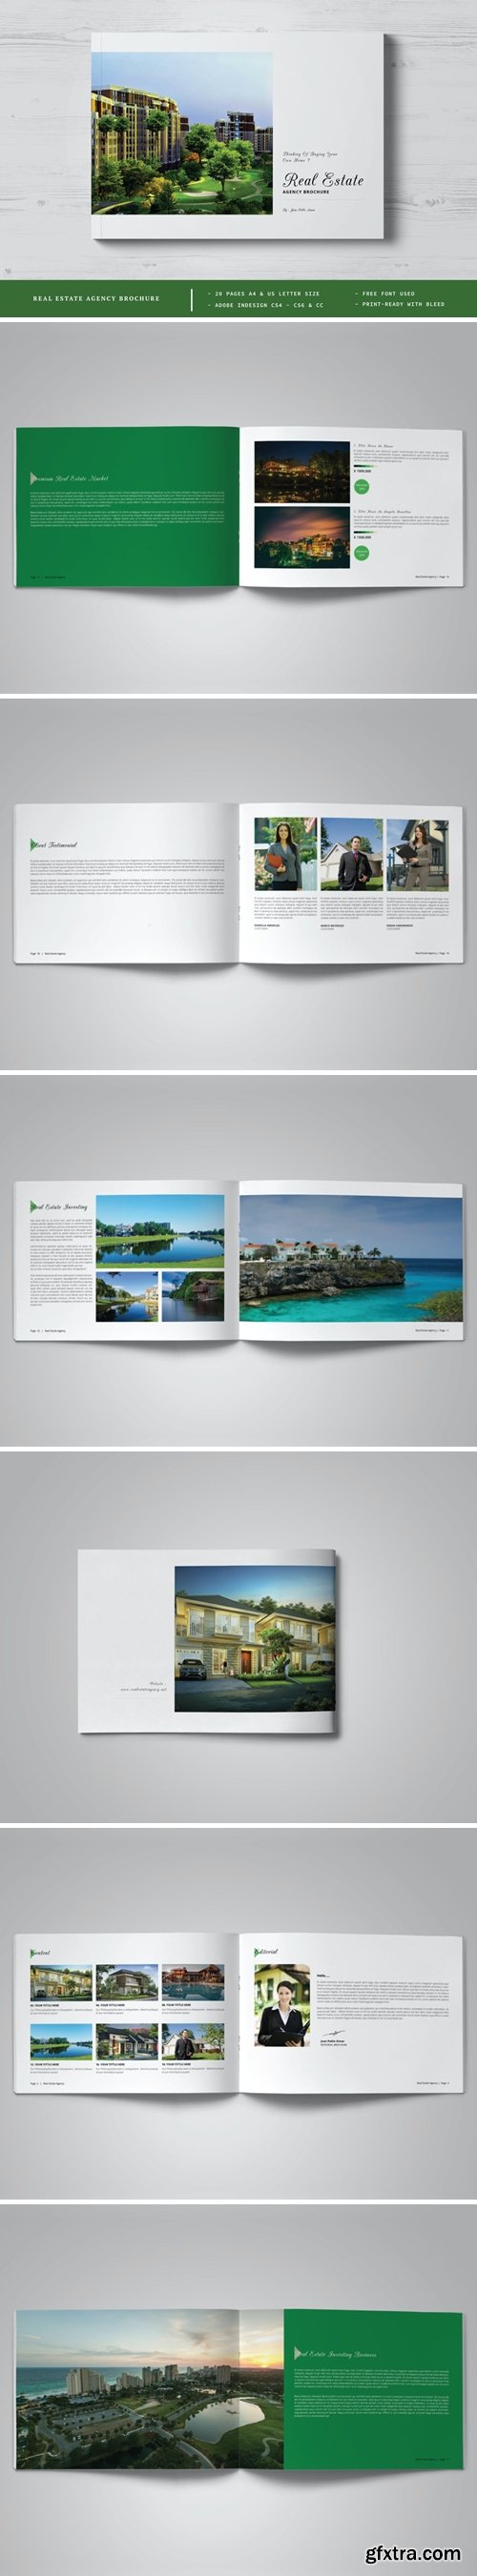 Real Estate Agency Brochure